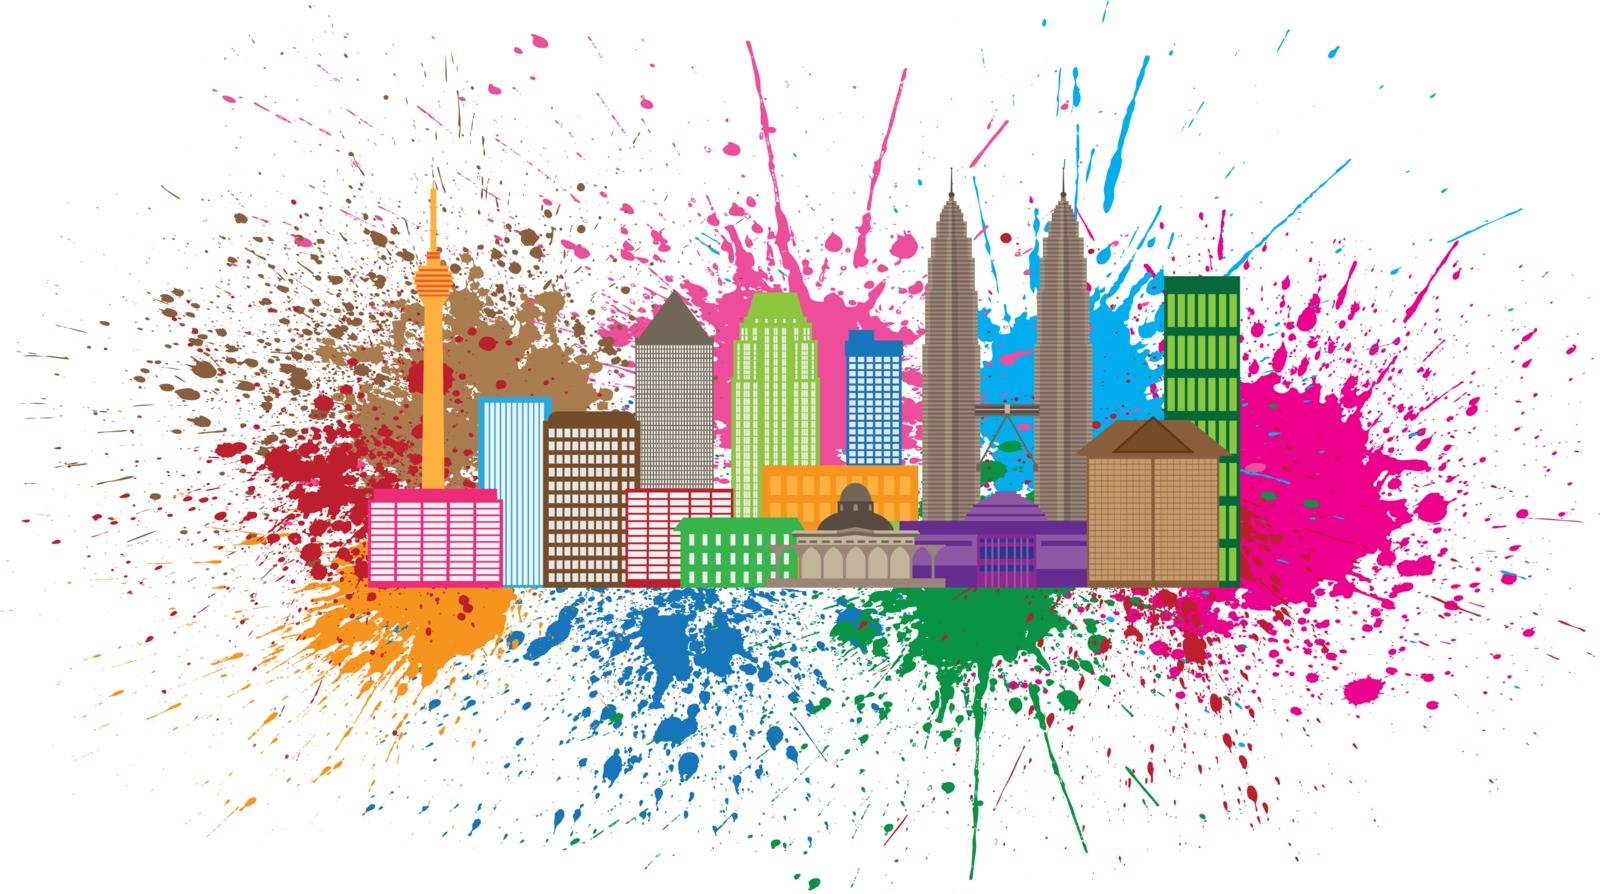 Kuala Lumpur City Skyline Paint Splatter Illustration by jpldesigns